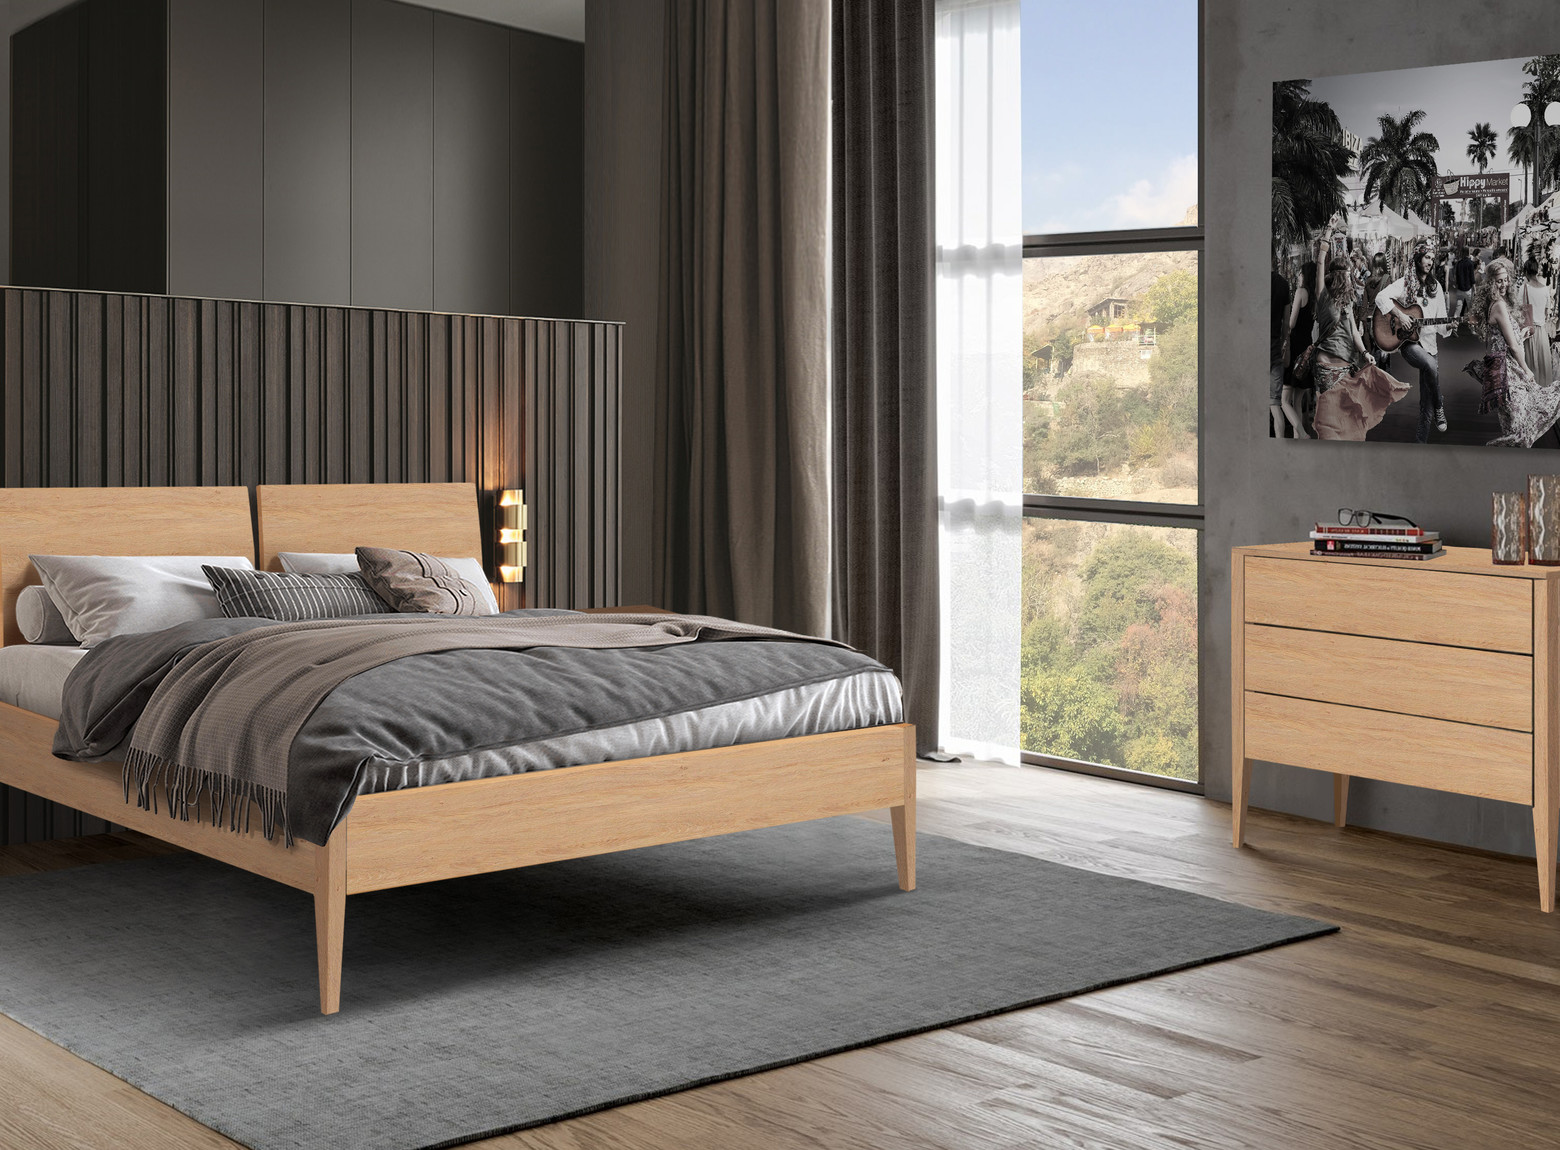 Lach gezond verstand account Houten bed Locarno | Luxe houten bed | Beddenplein - Beddenplein.nl